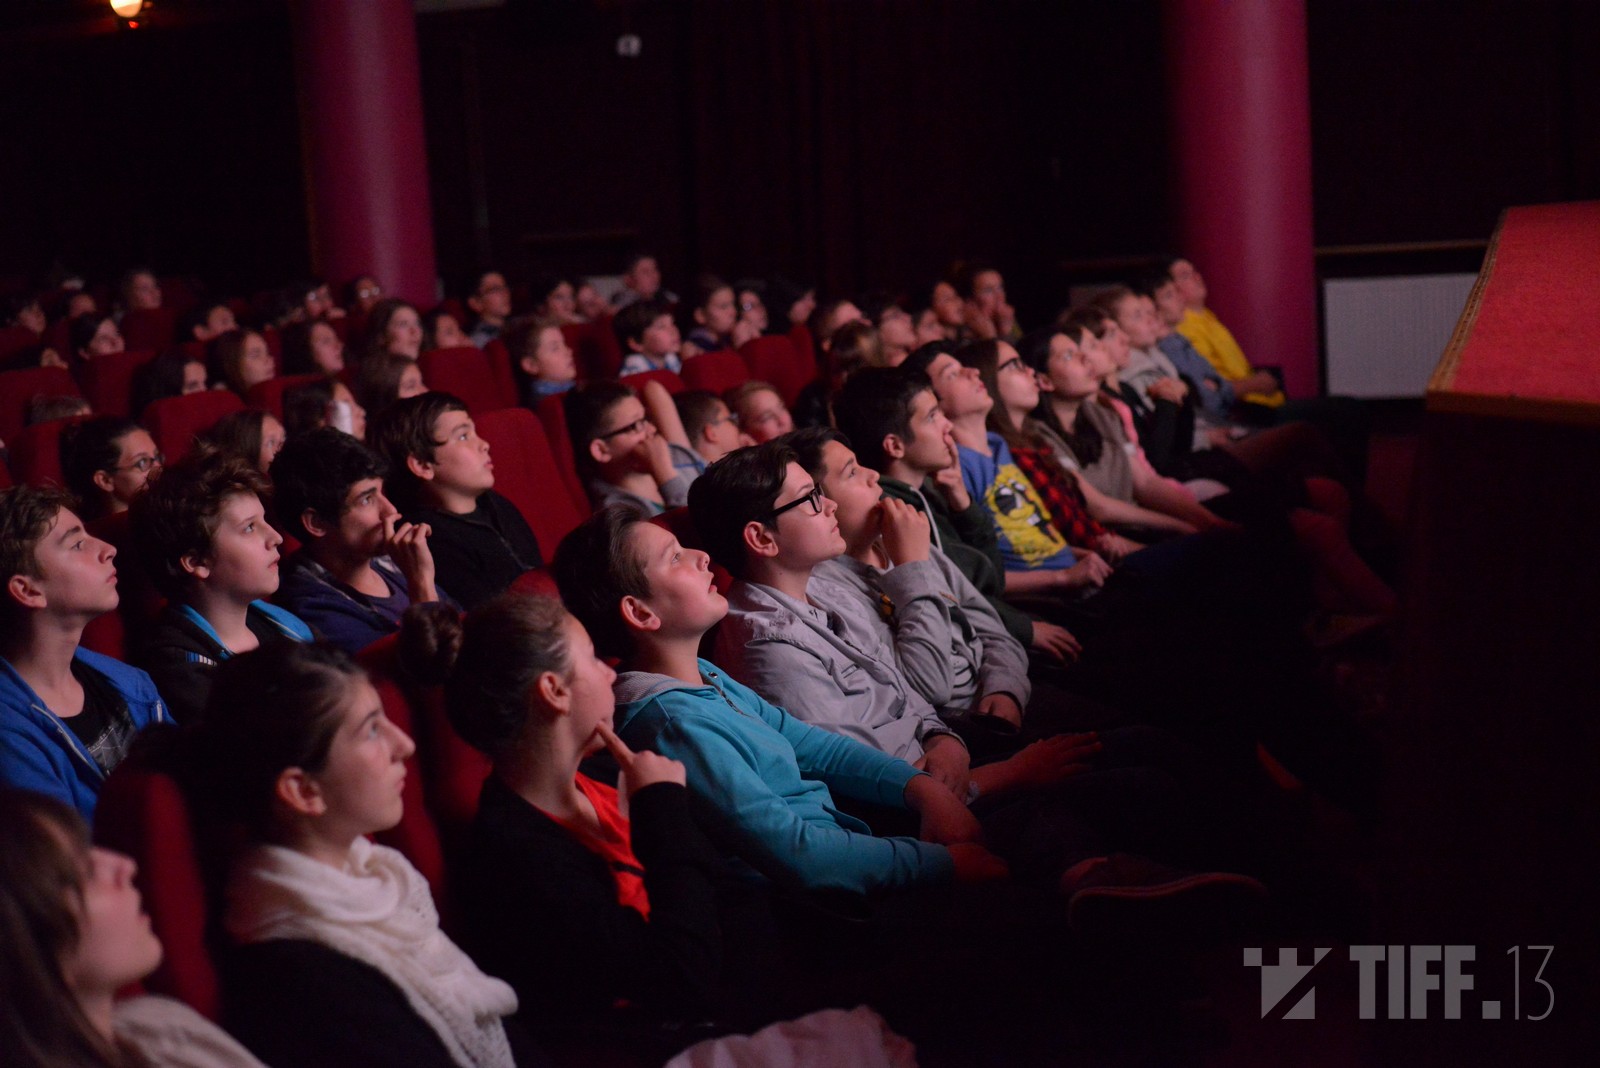 EducaTIFF - programul de educatie cinematografic? revine in Cluj-Napoca